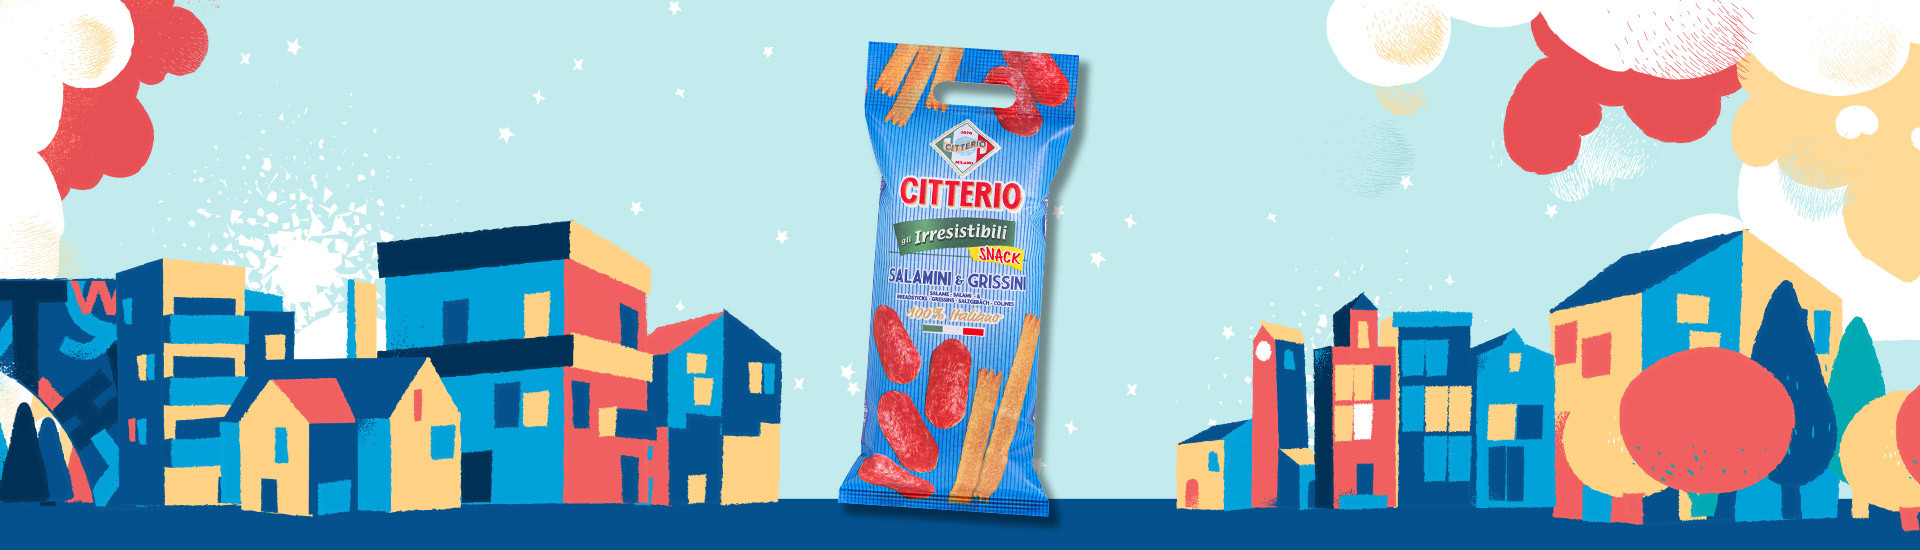 citterio-web-header-irresistibili-snack-salamini.jpg